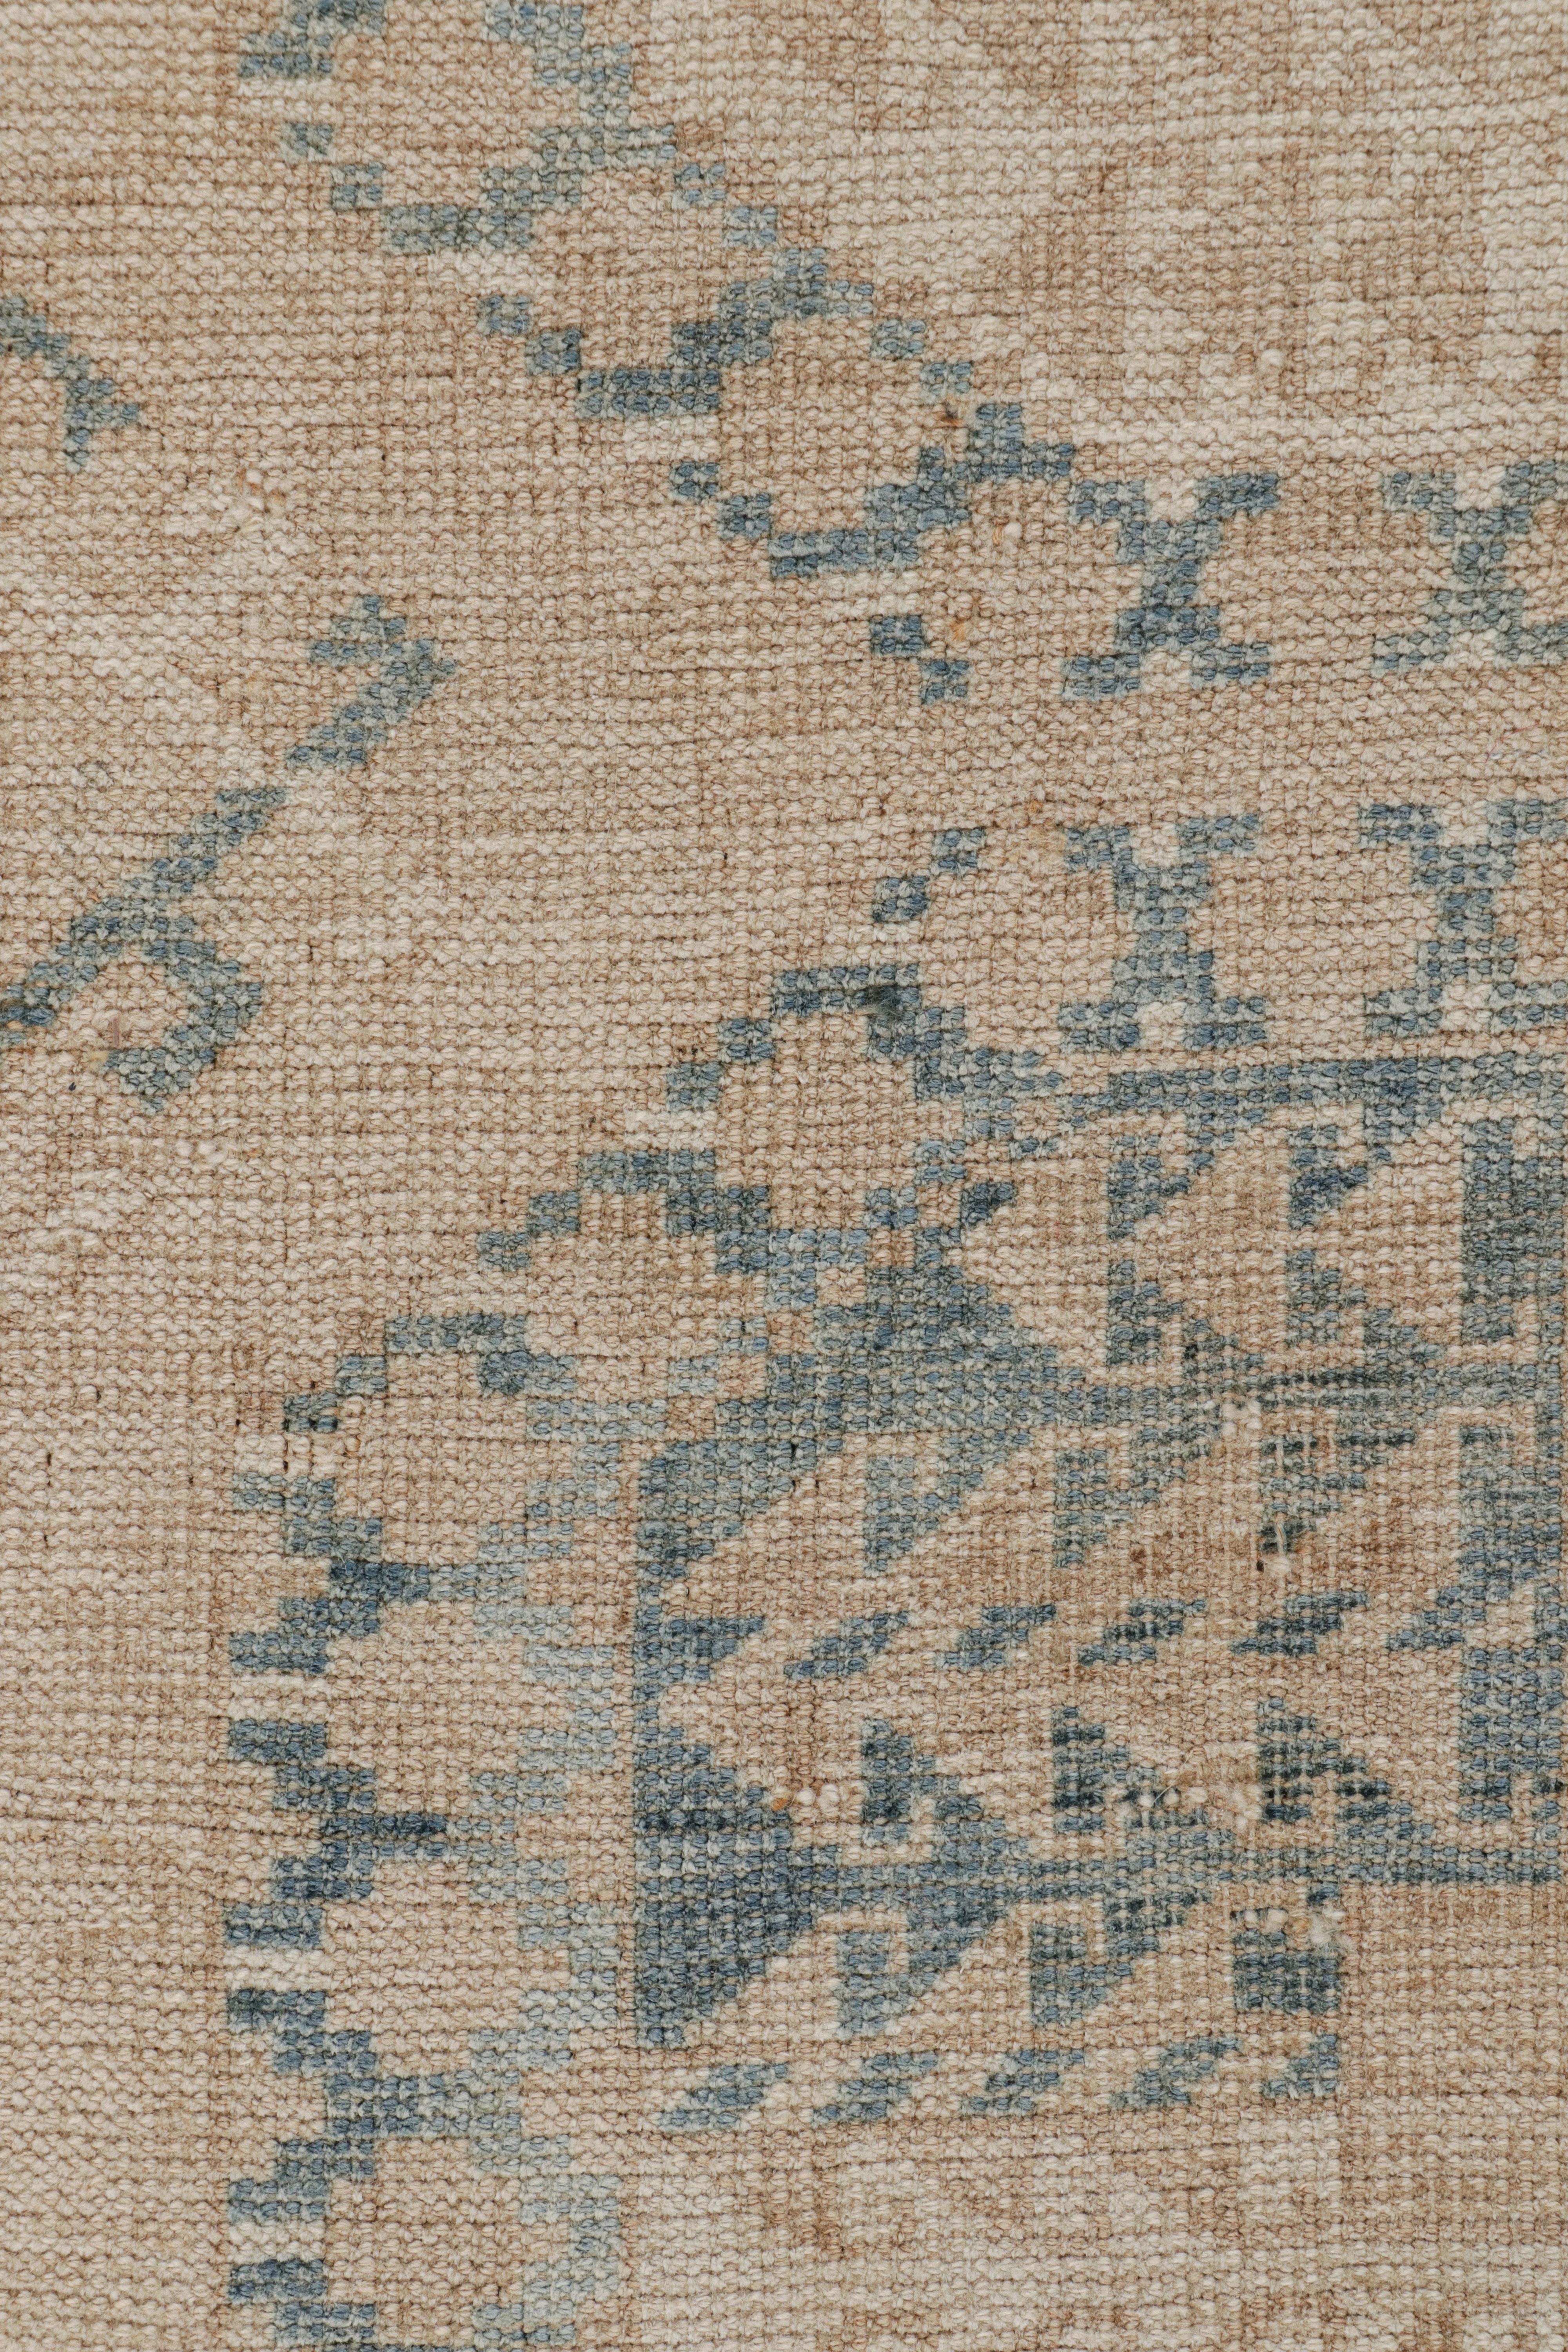 Tribal Vintage Ersari Rug in Beige-brown with Light Blue Patterns, from Rug & Kilim  For Sale